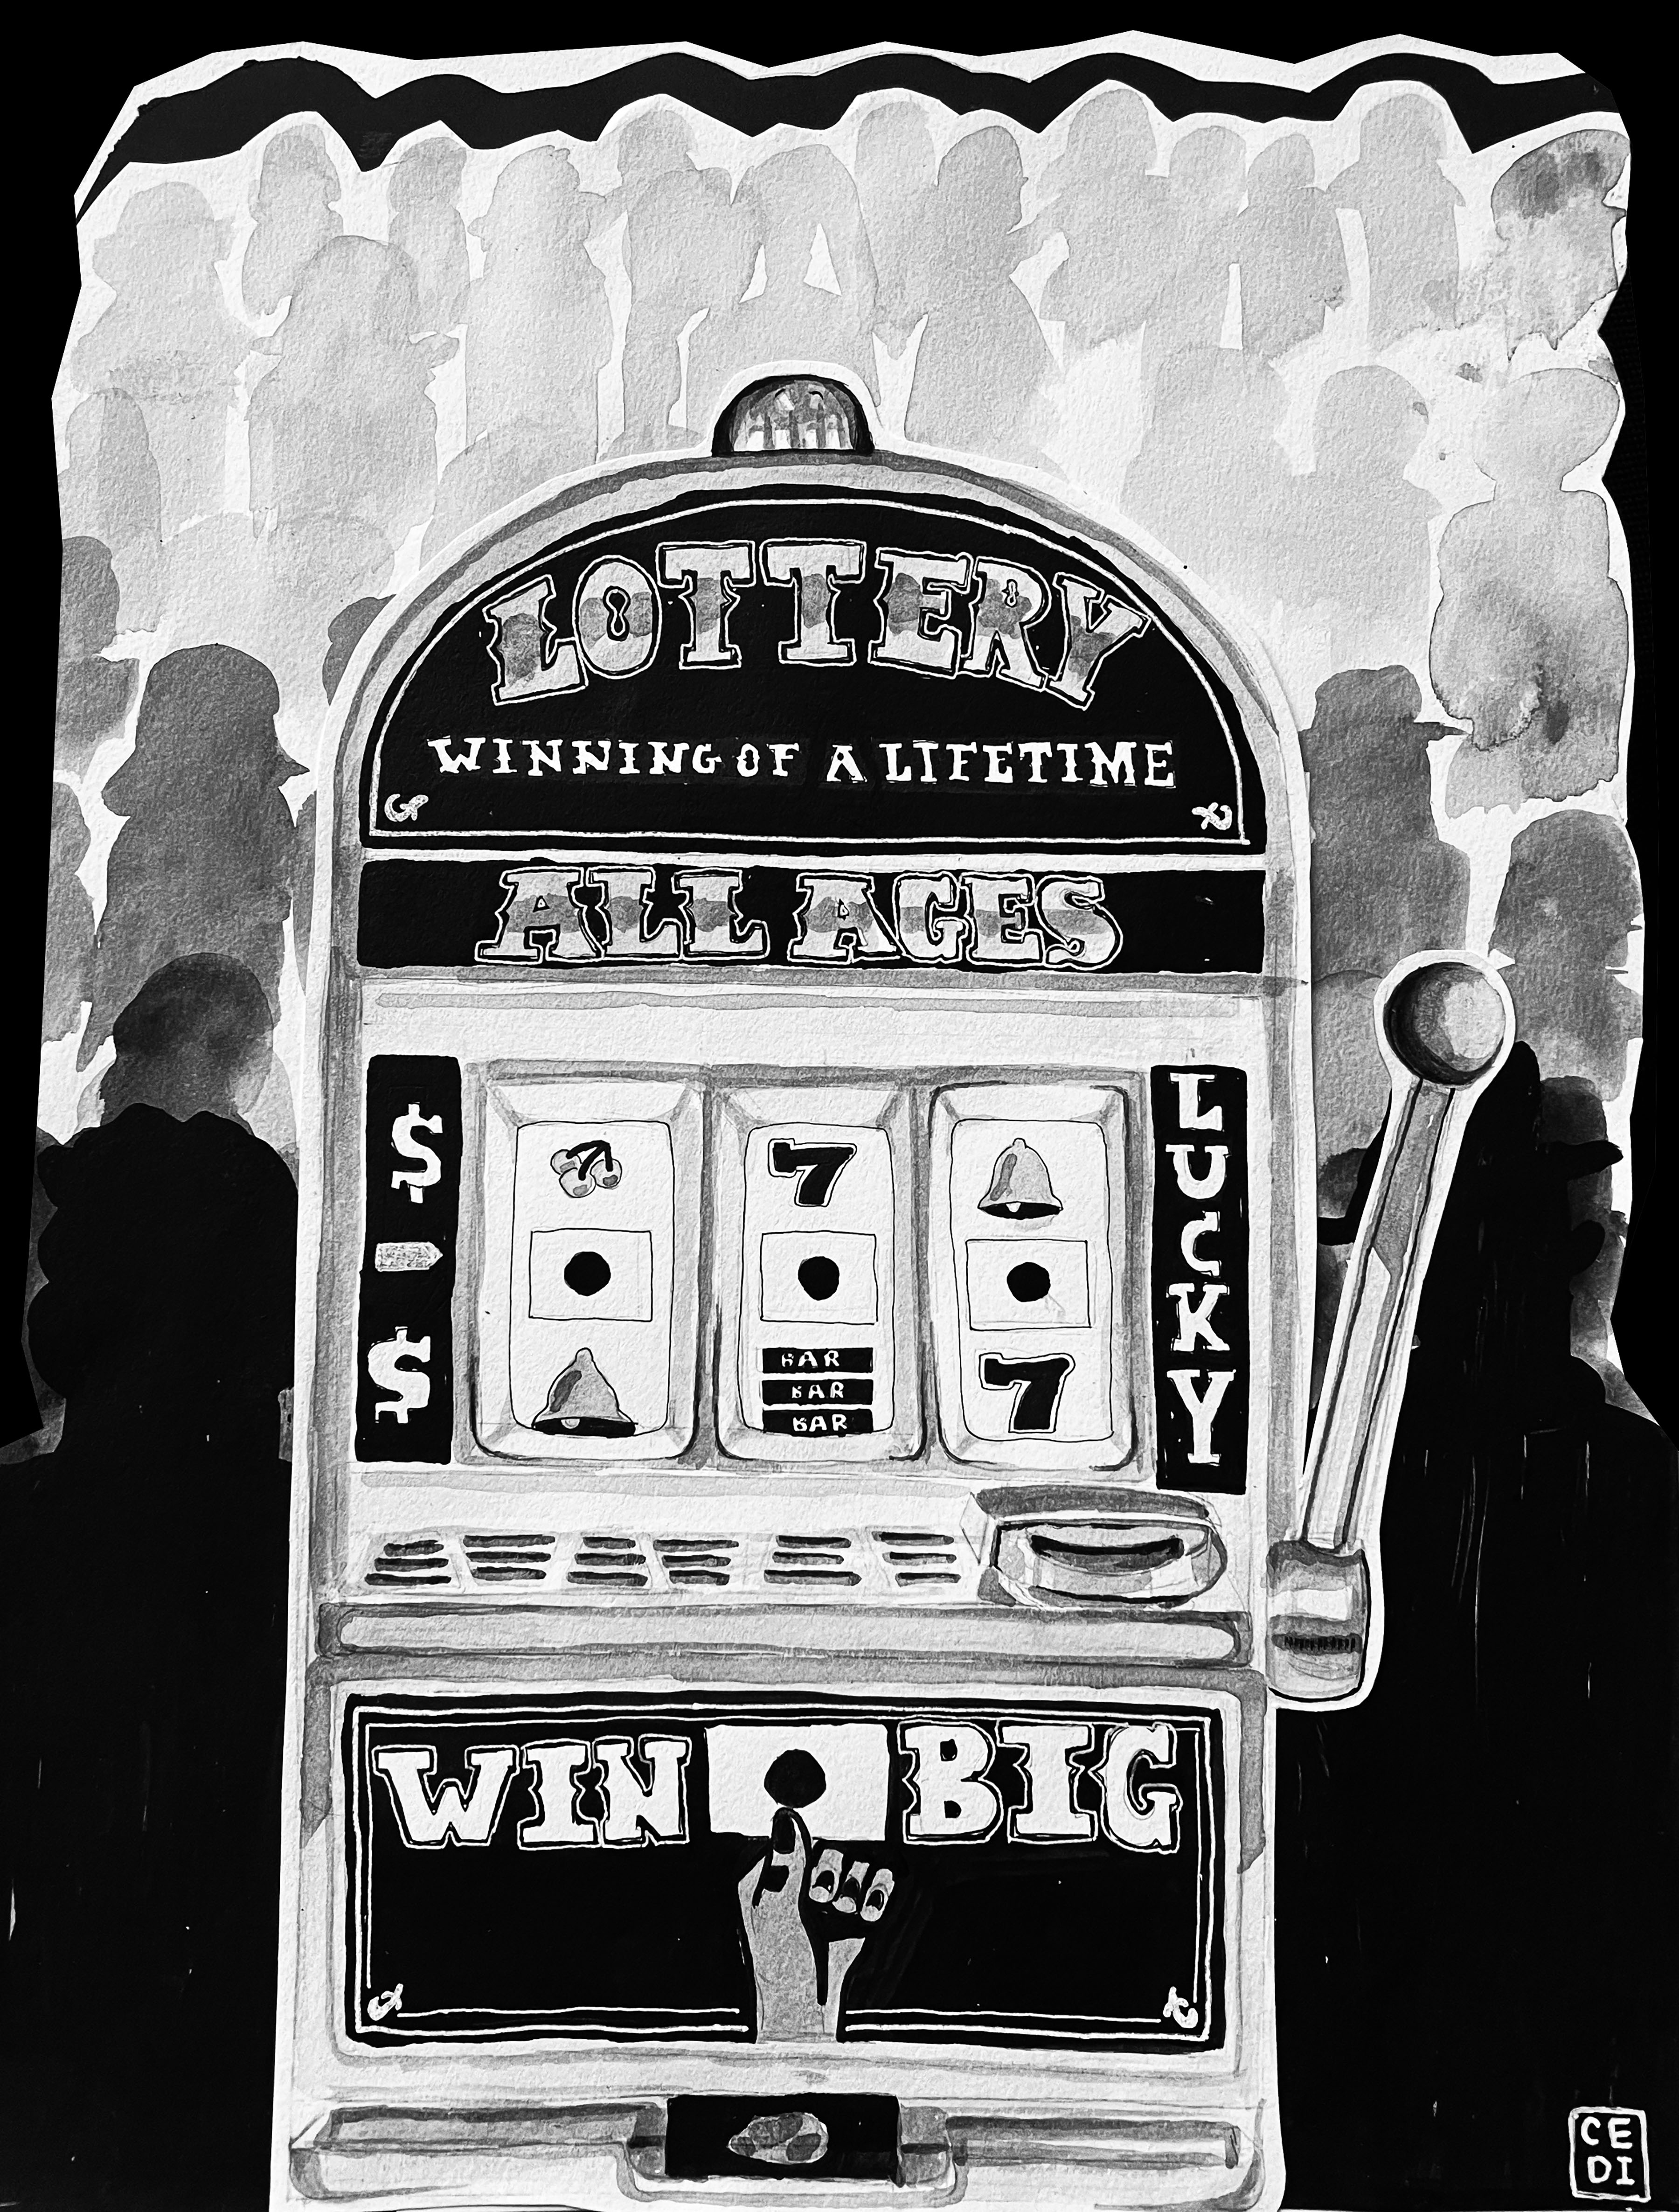 black and white illustration of a slot machine